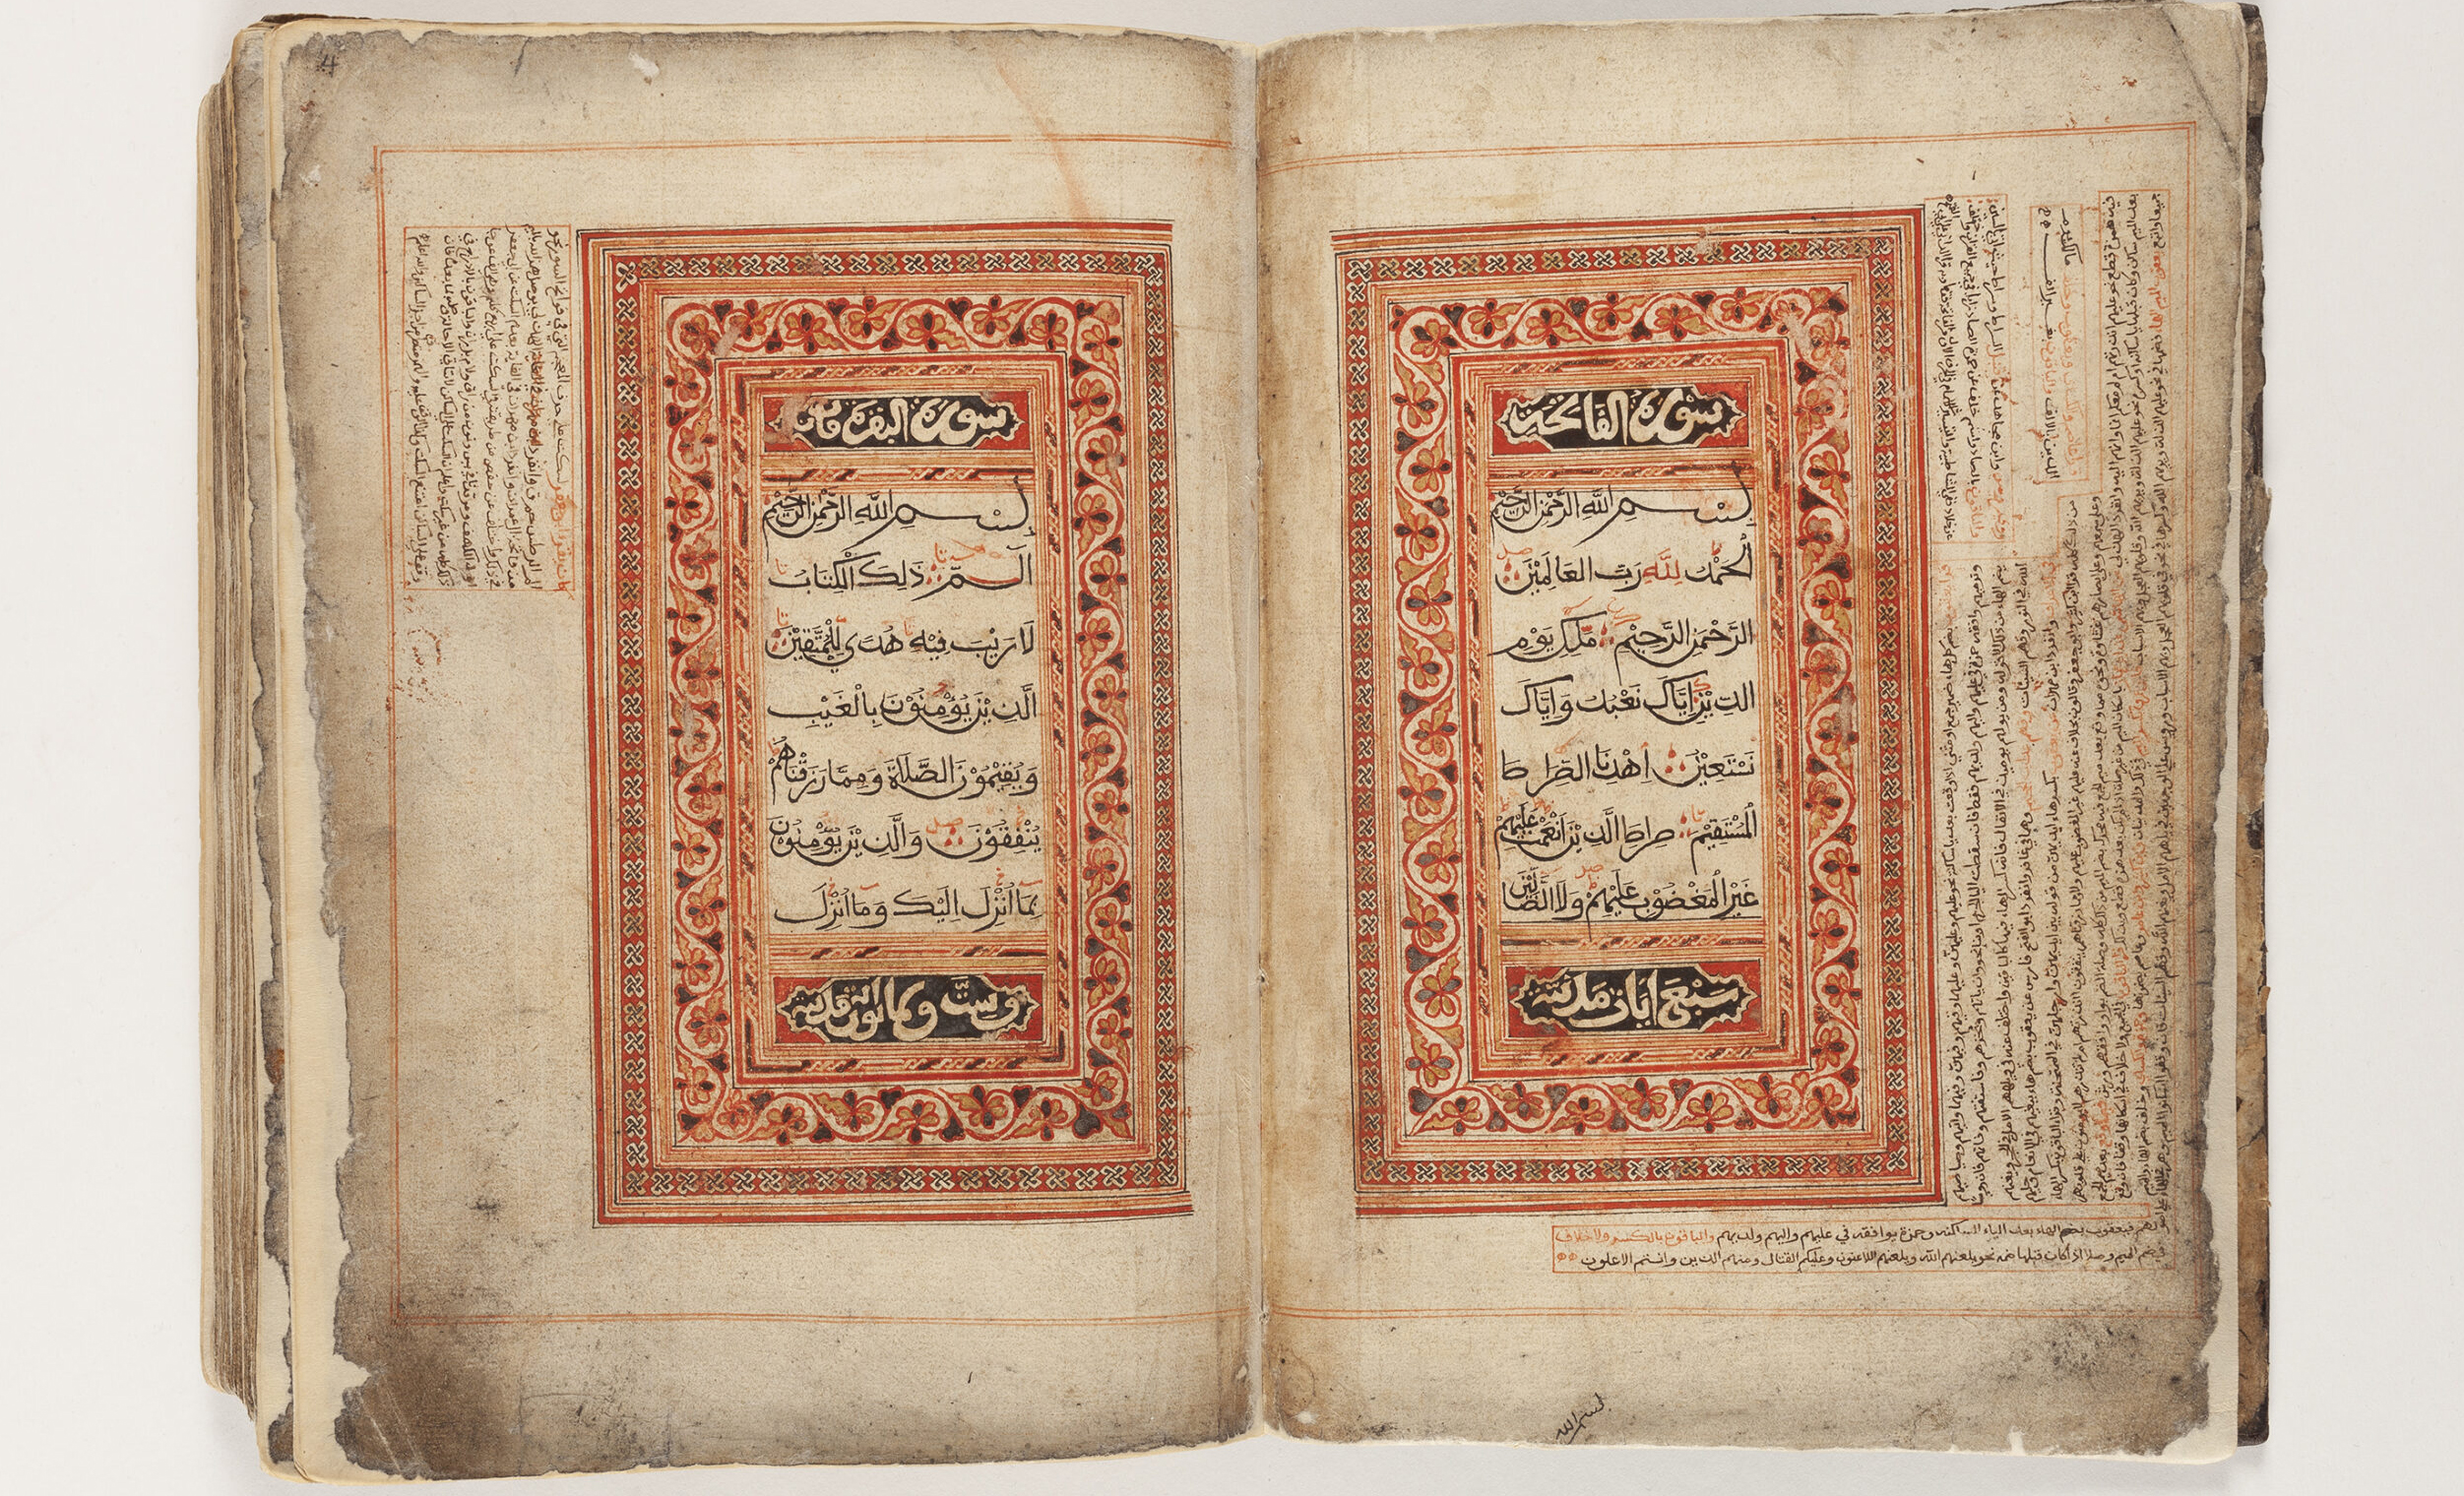 A Qur’an manuscript from coastal East Africa